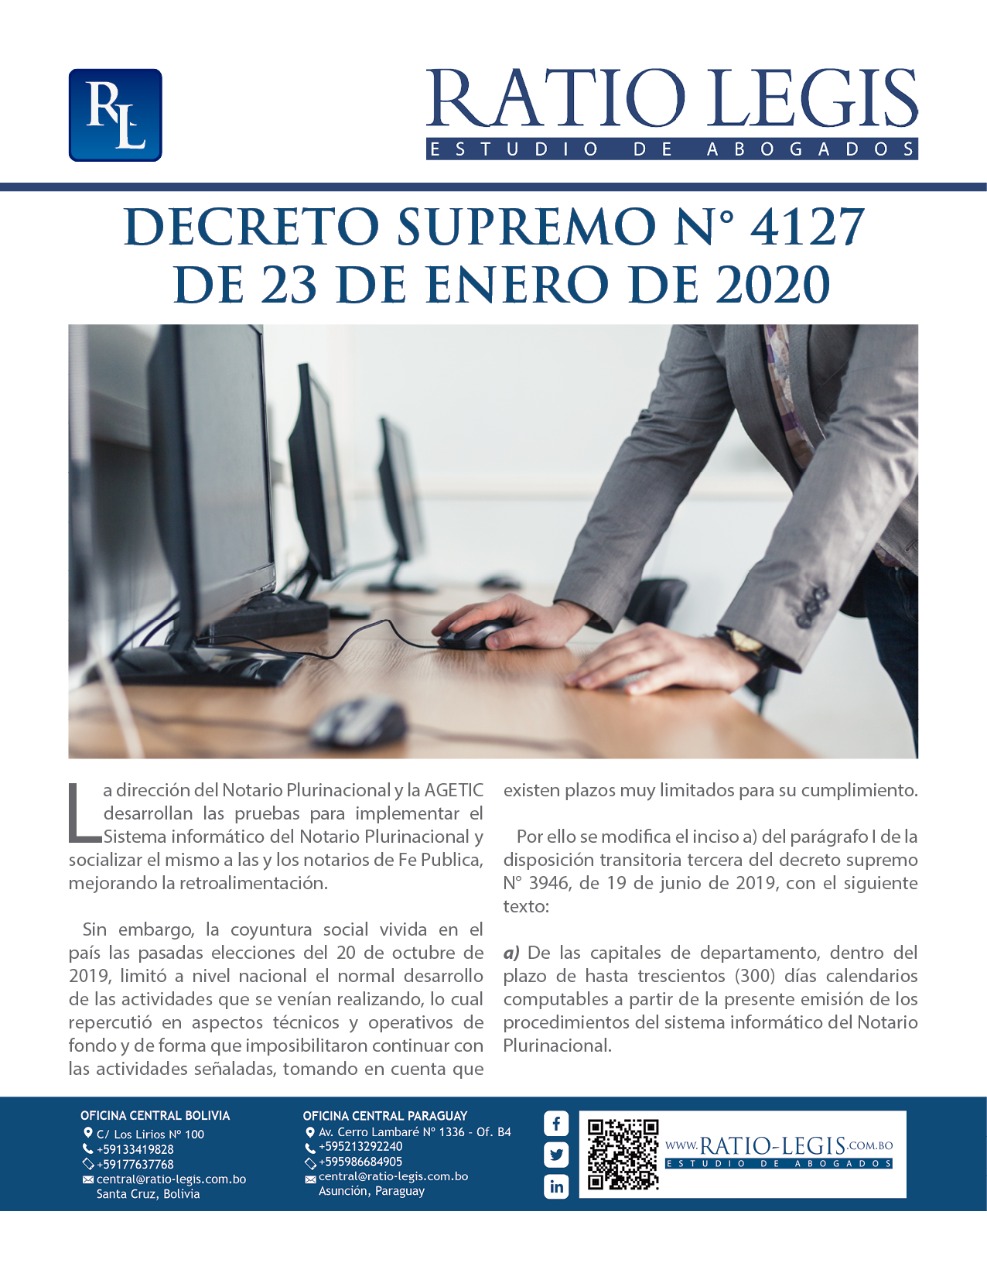 (Español) Decreto Supremo Nº 4127 de 23 de Enero de 2020